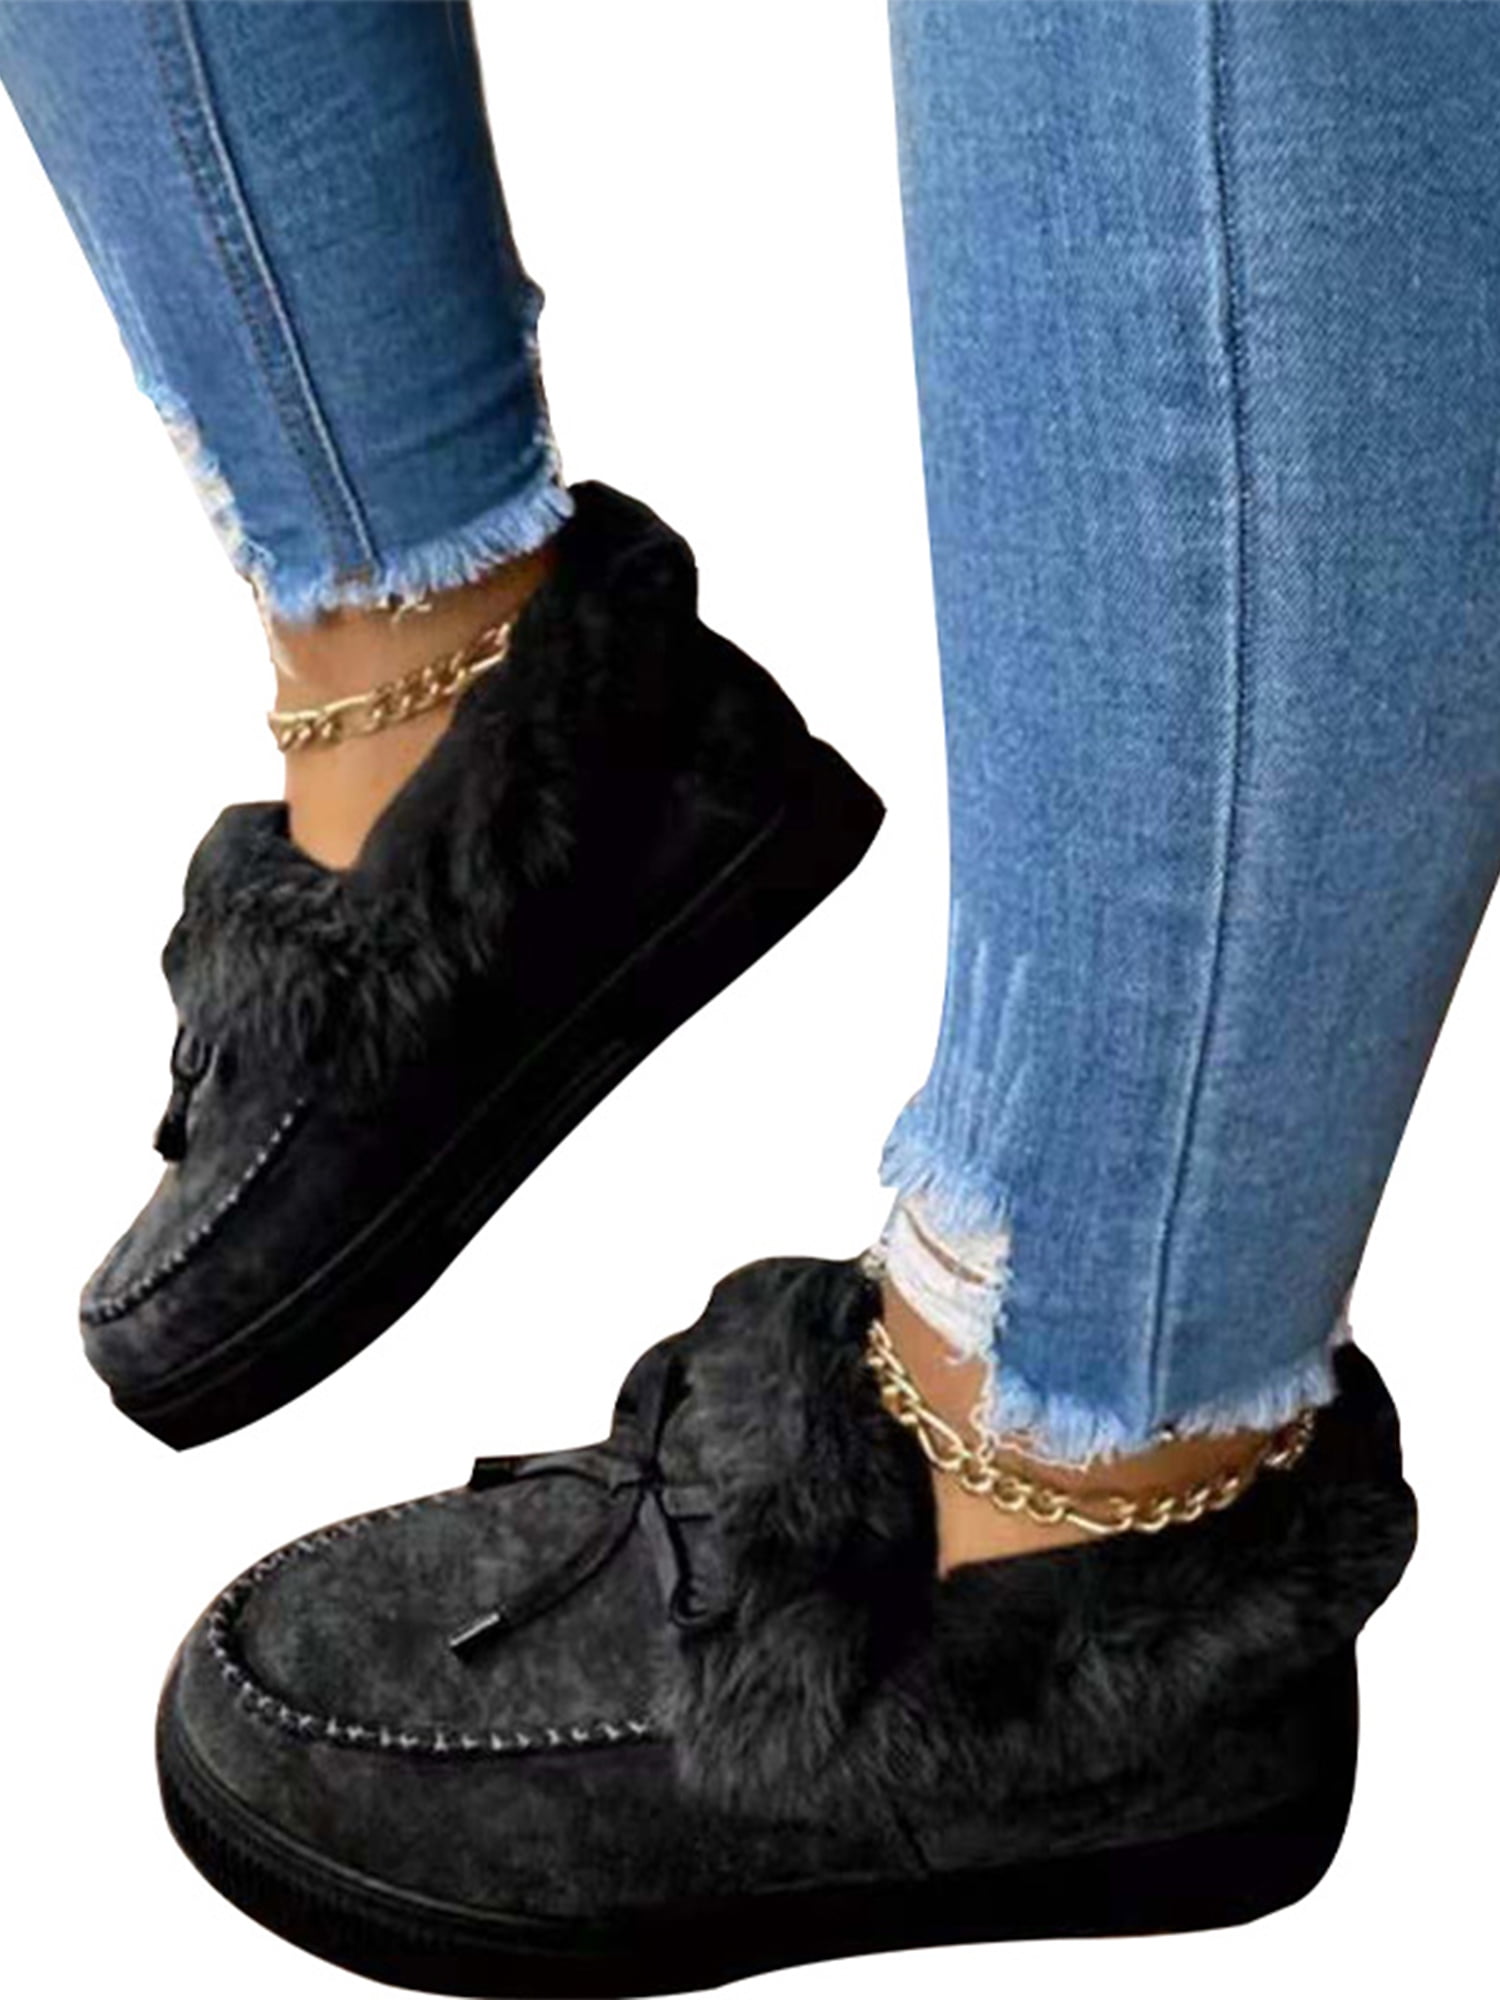 Details about   Women Ankle Boots Ankle Buckle Lace Up Platform Block Heel Combat Casual Shoes B 